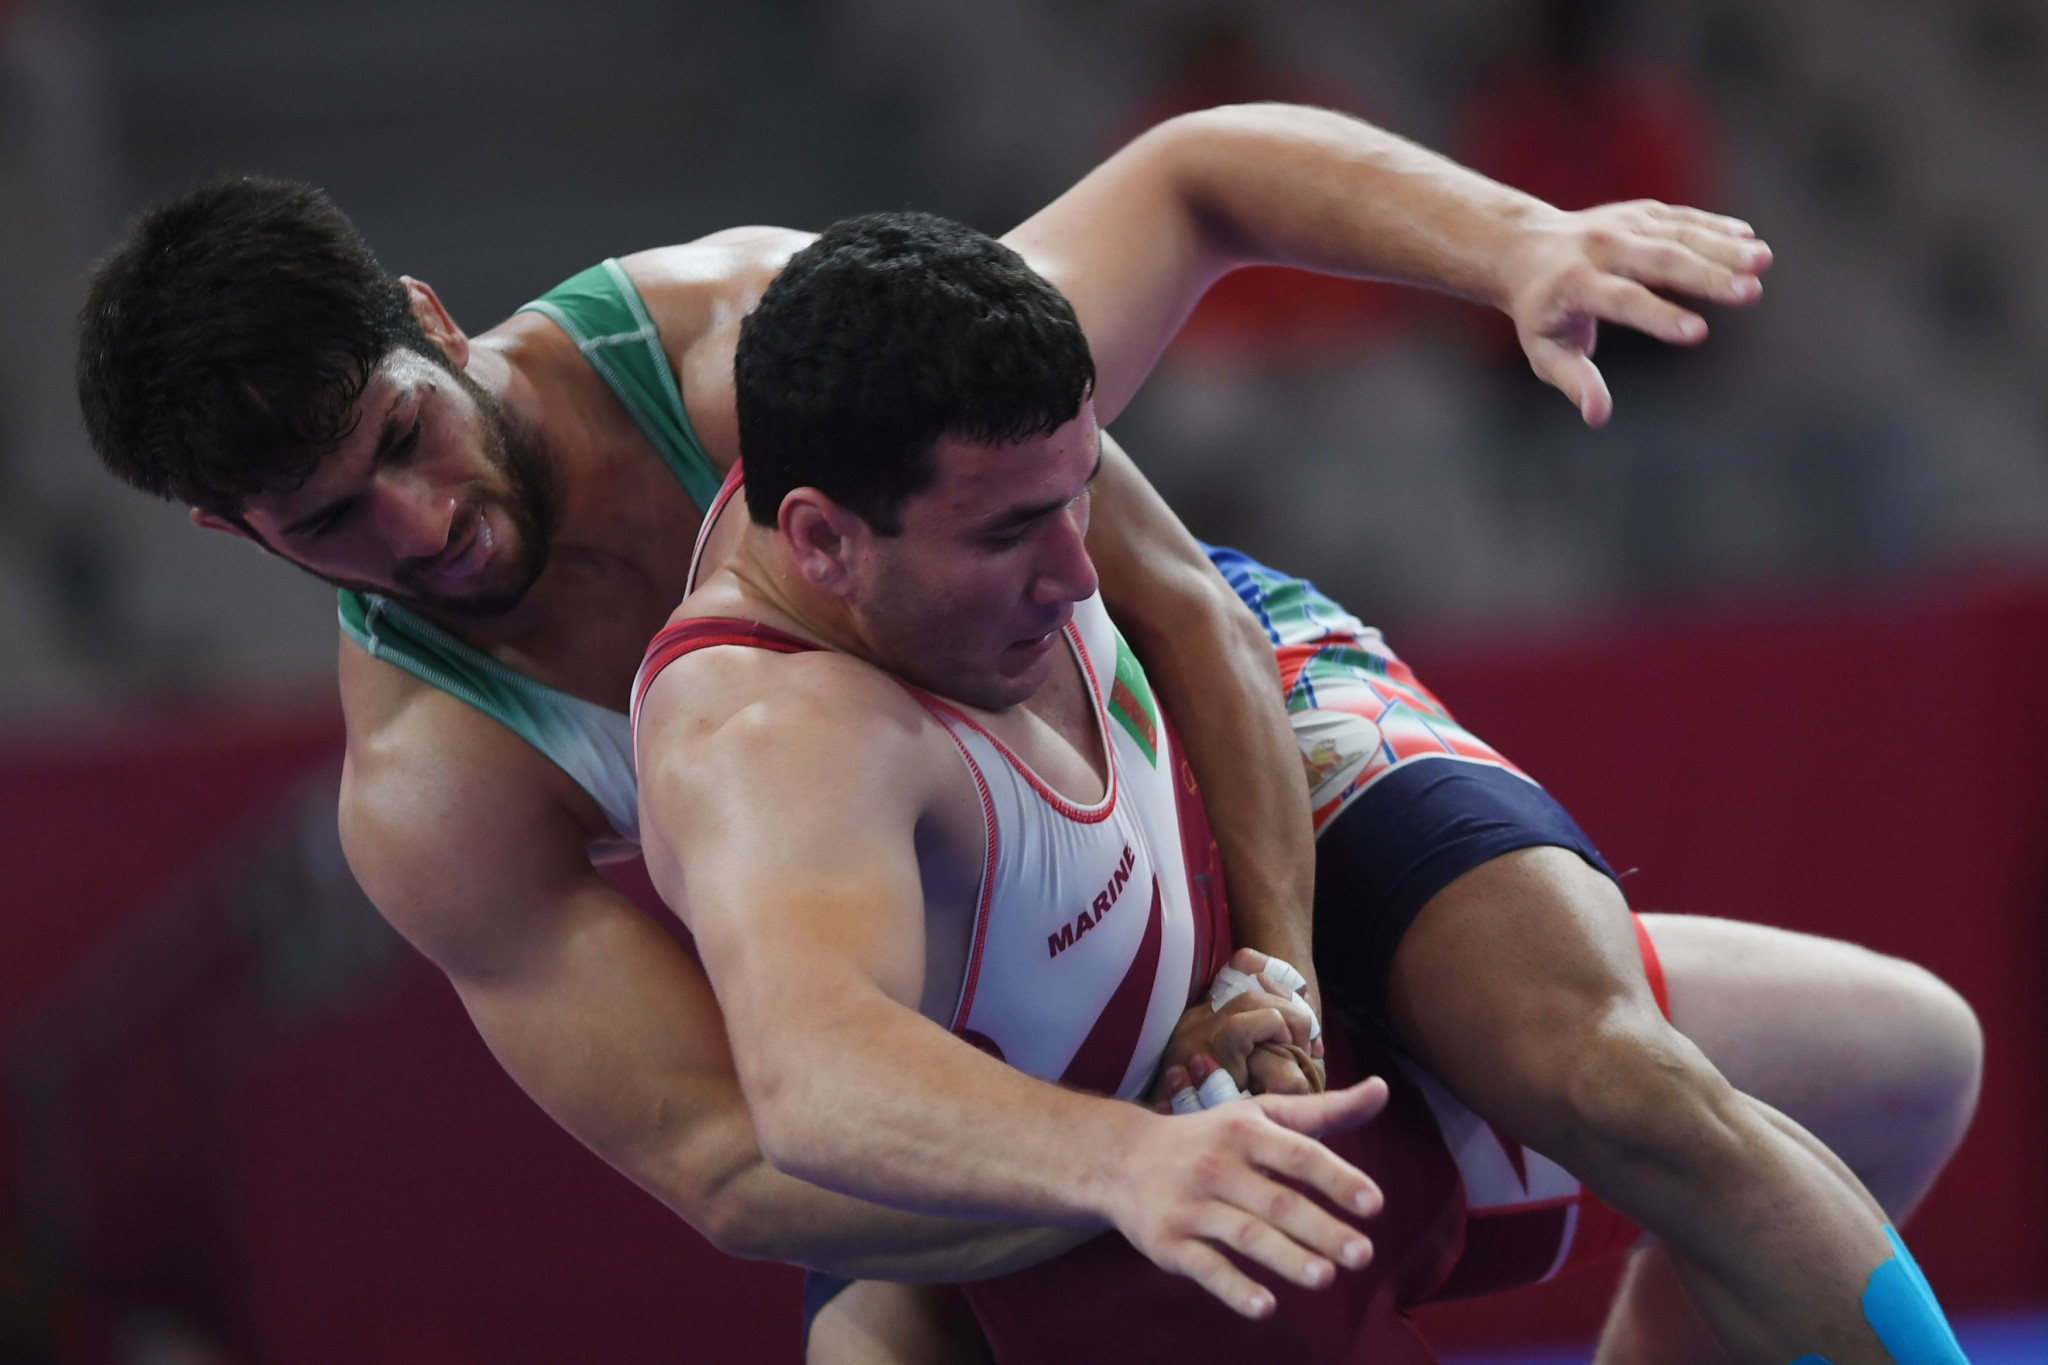 Rustem Nazarov's compatriot Shyhazberdi Ovelekov won a bronze medal in the men's Greco-Roman 87kg category at the 2018 Asian Games ©Getty Images